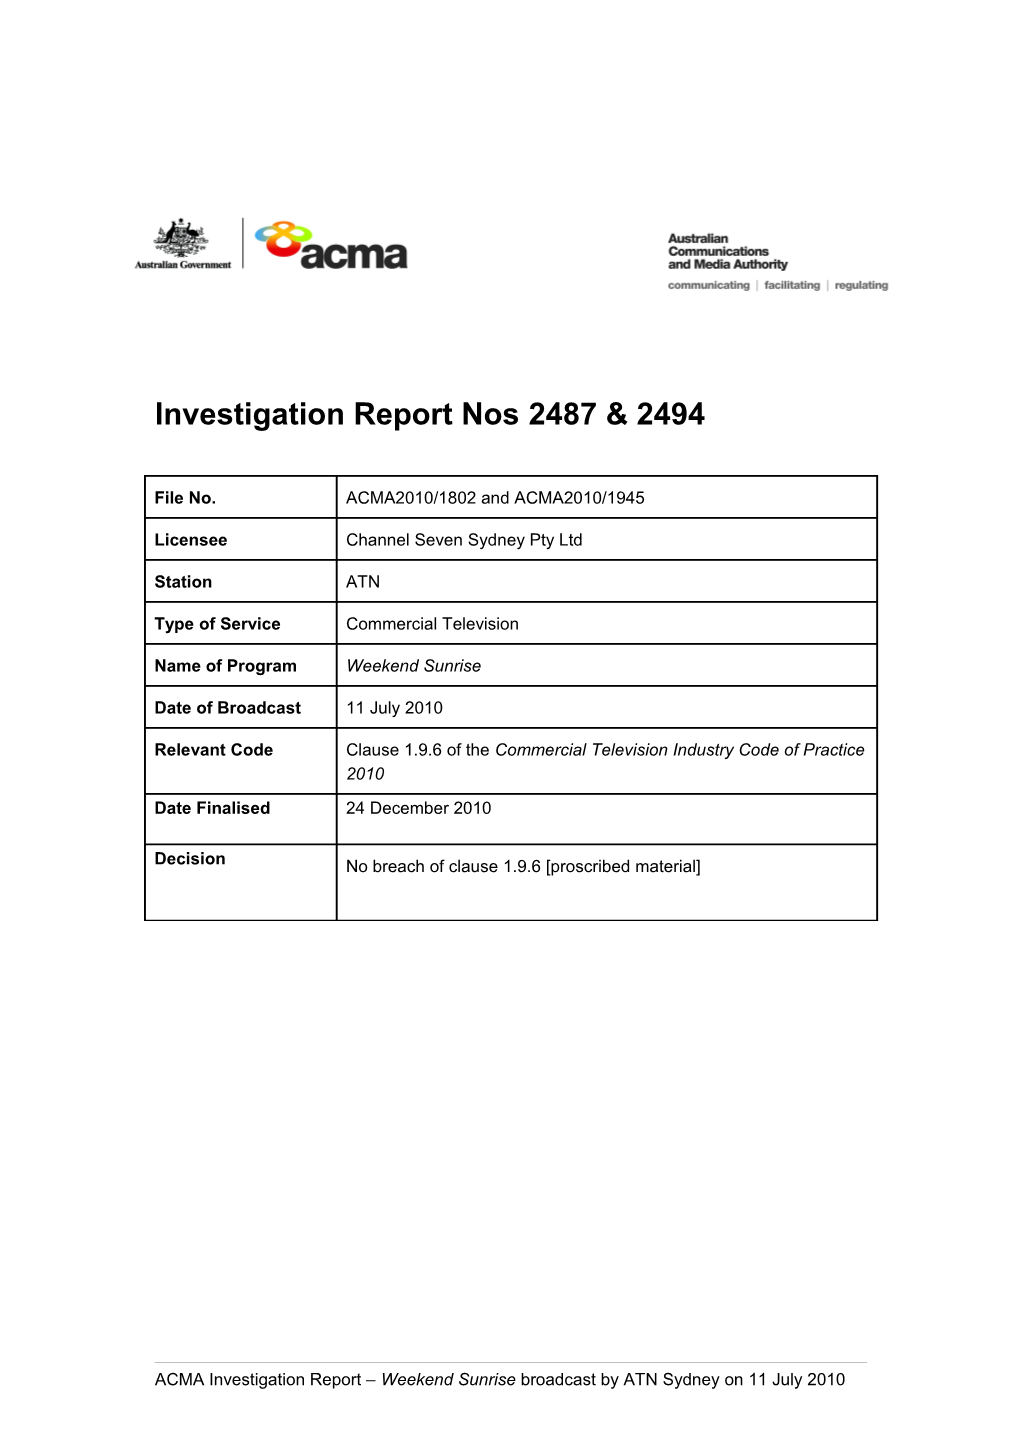 ATN - ACMA Investigation Reports 2487 & 2494